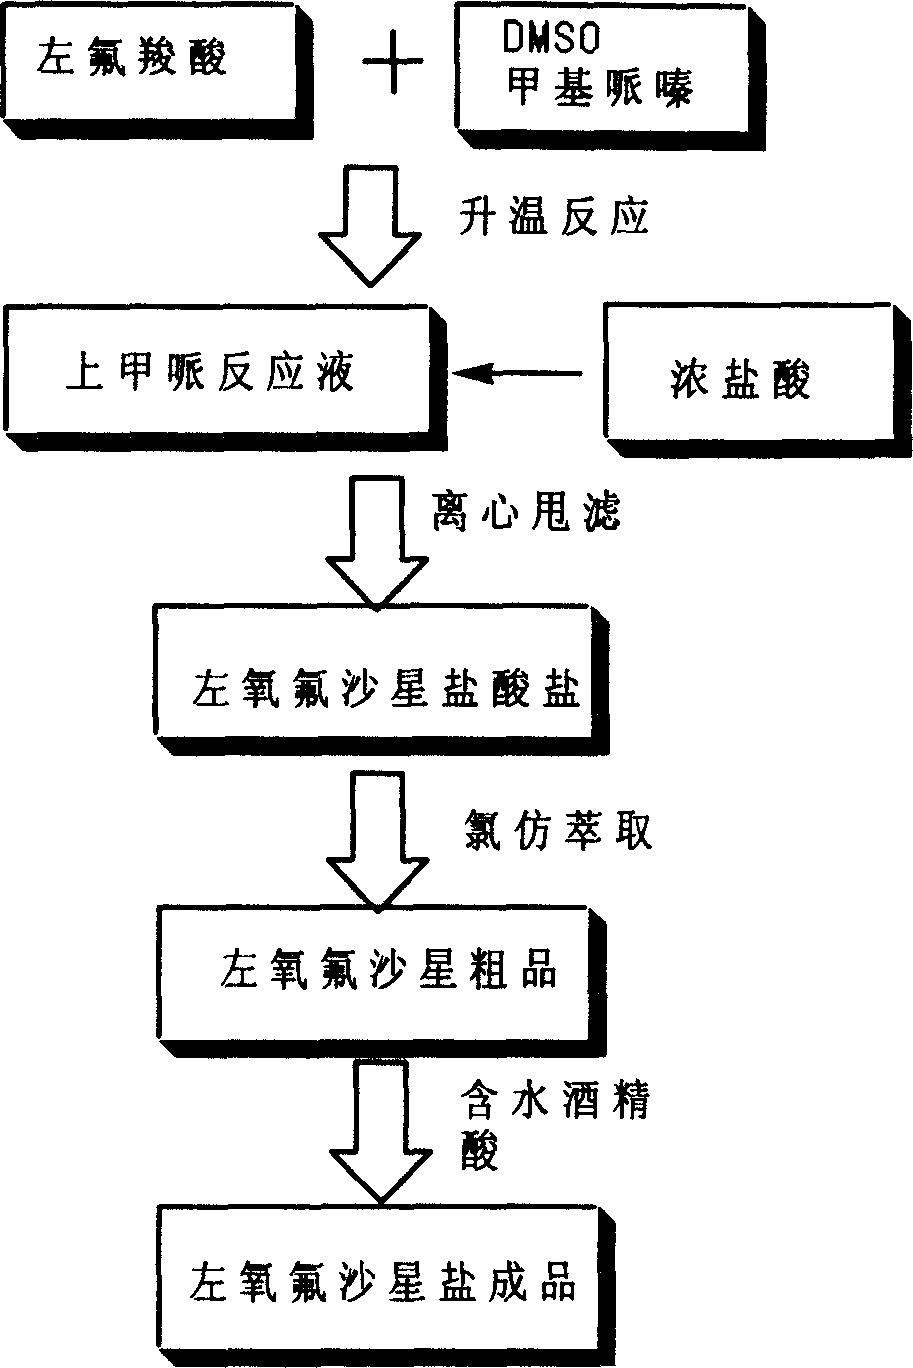 Post processing method for preparing levo-ofloxacin